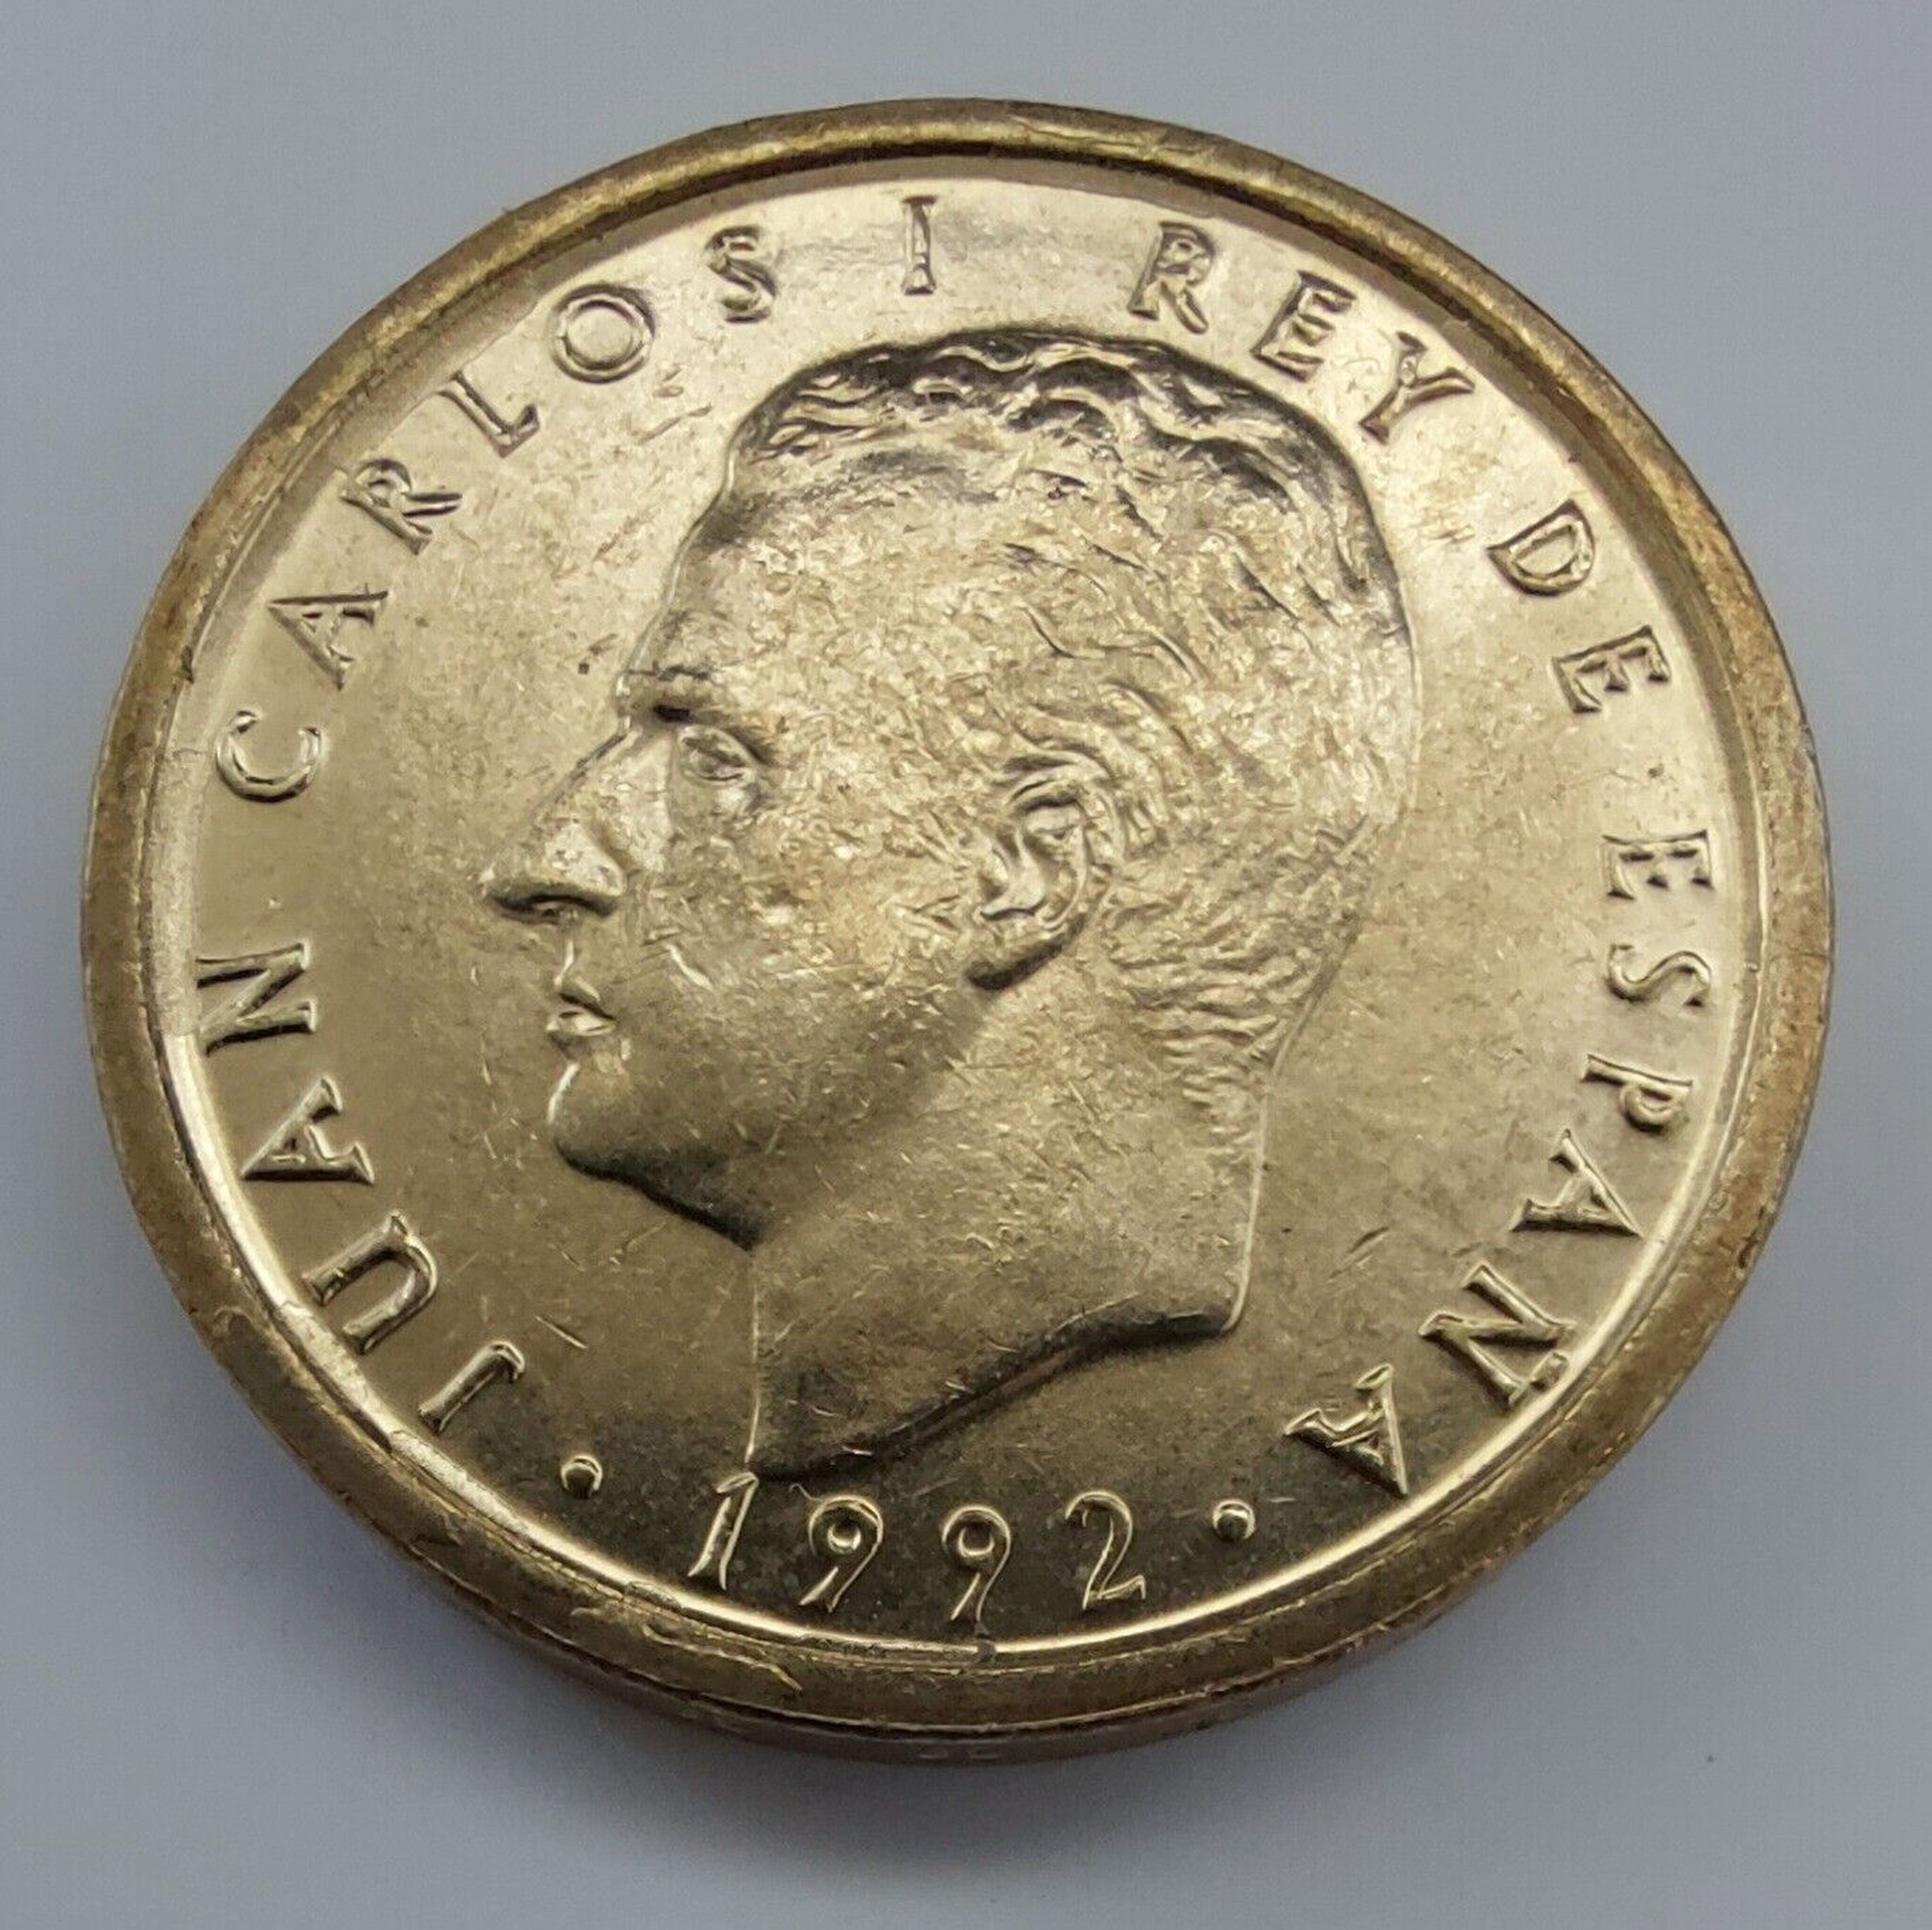 100 pesetas de 1992